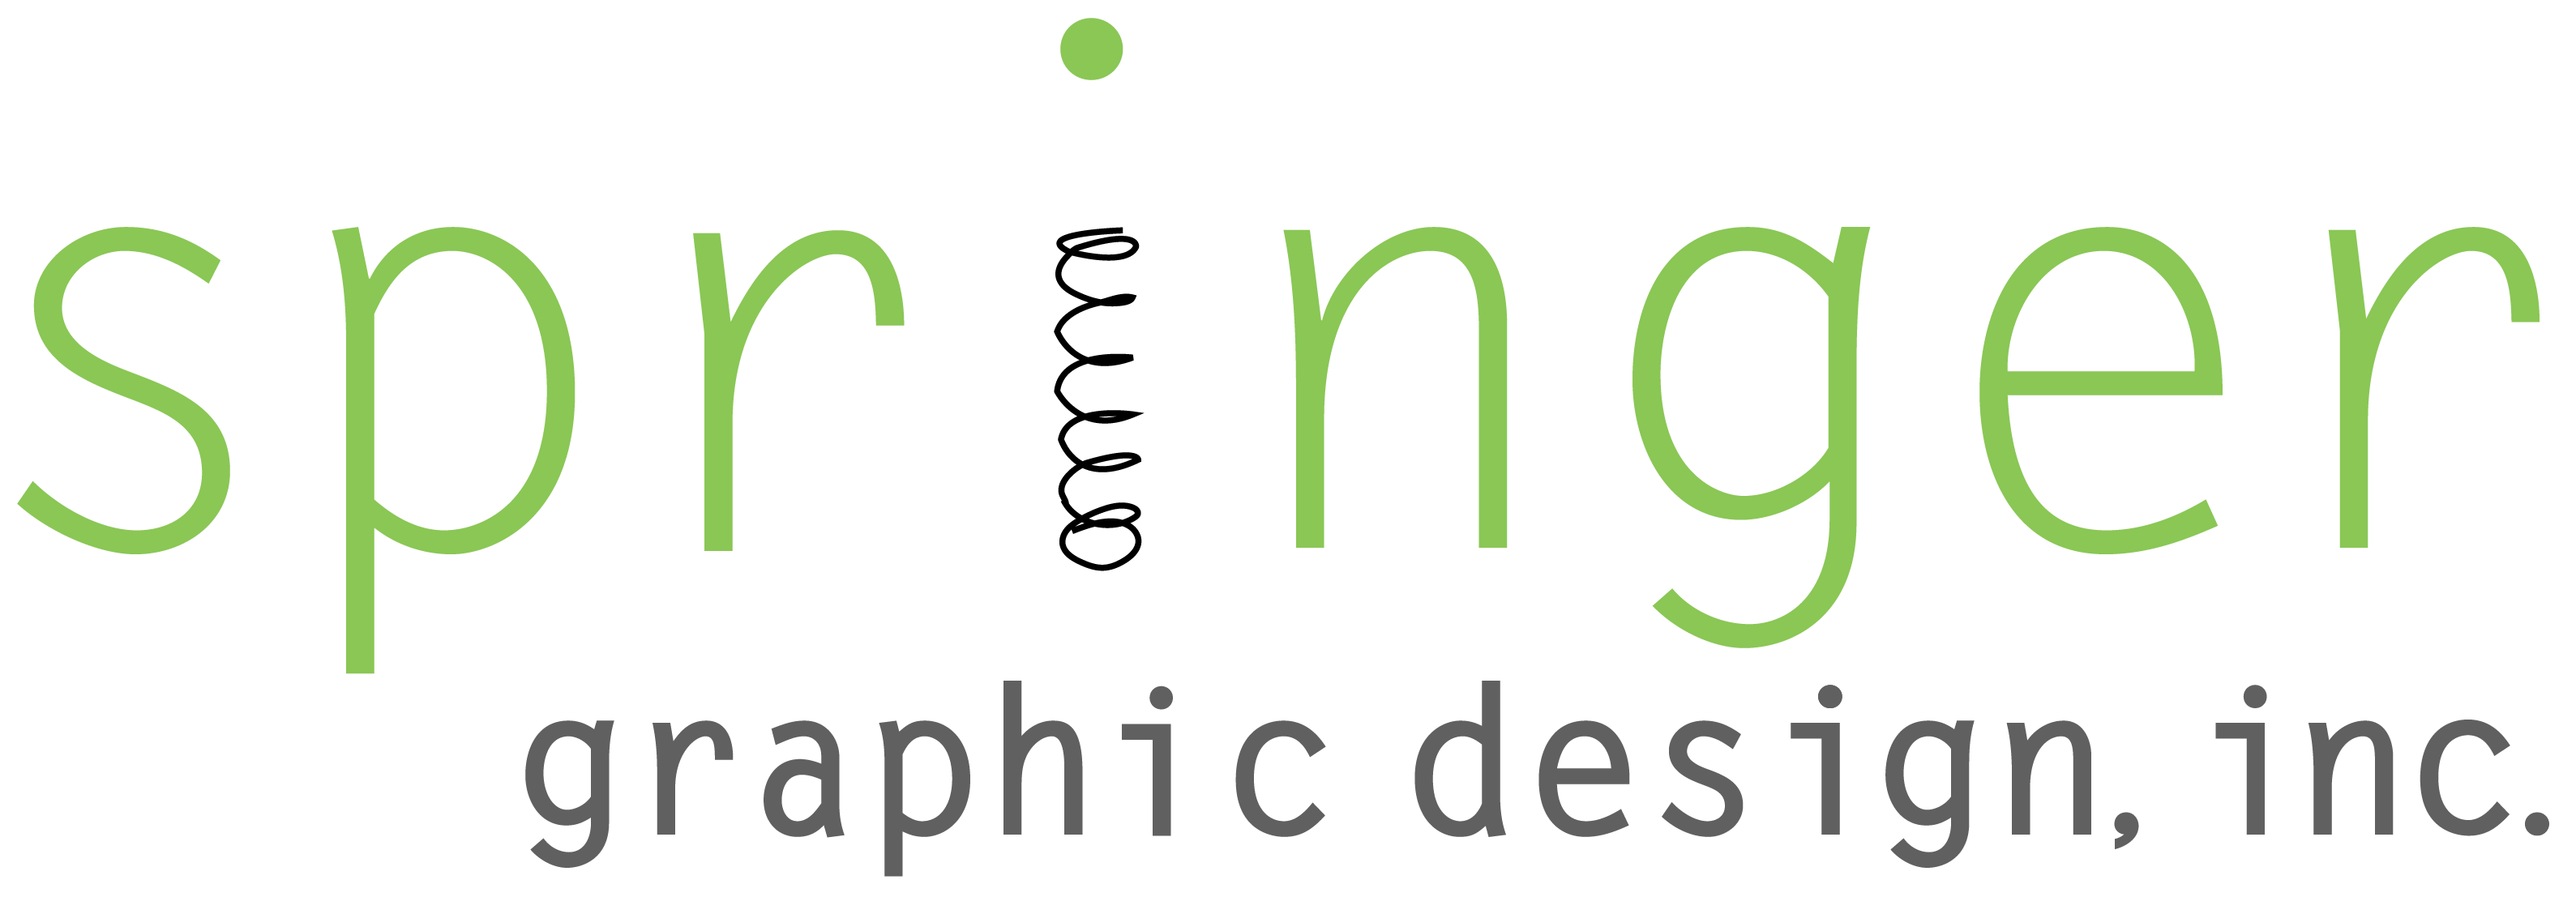 Logo Design Services in San Diego | Springer Graphic Design